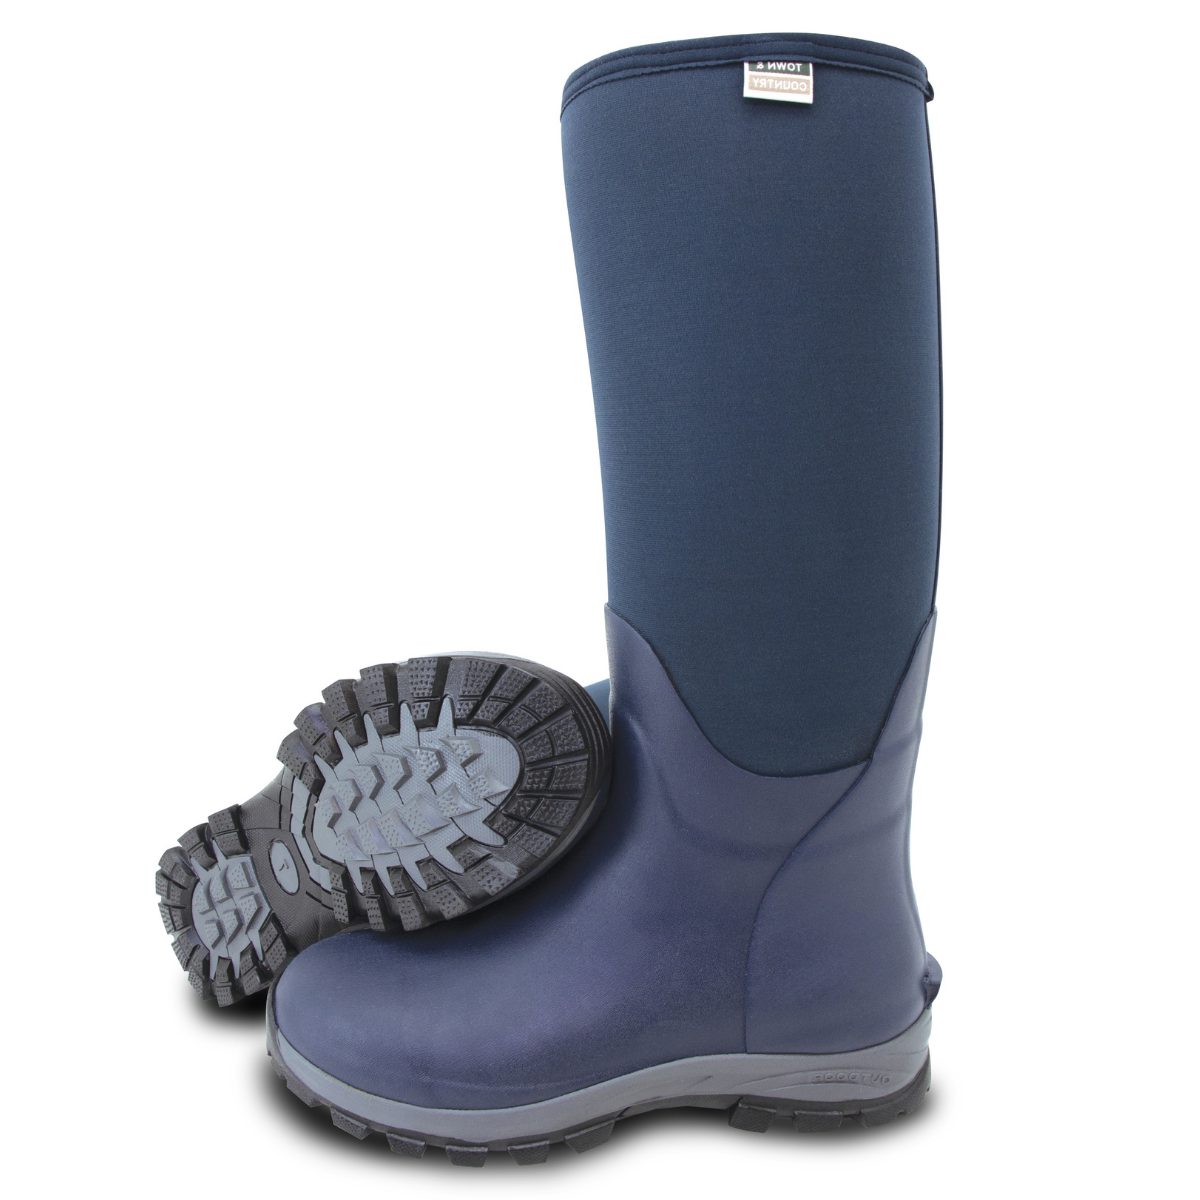 Town & Country Ladies/Women's/Men's Wellies Adjustable Buckle Flat Festival Wellies Rain Boots Wellingtons Sizes 4-12 UK